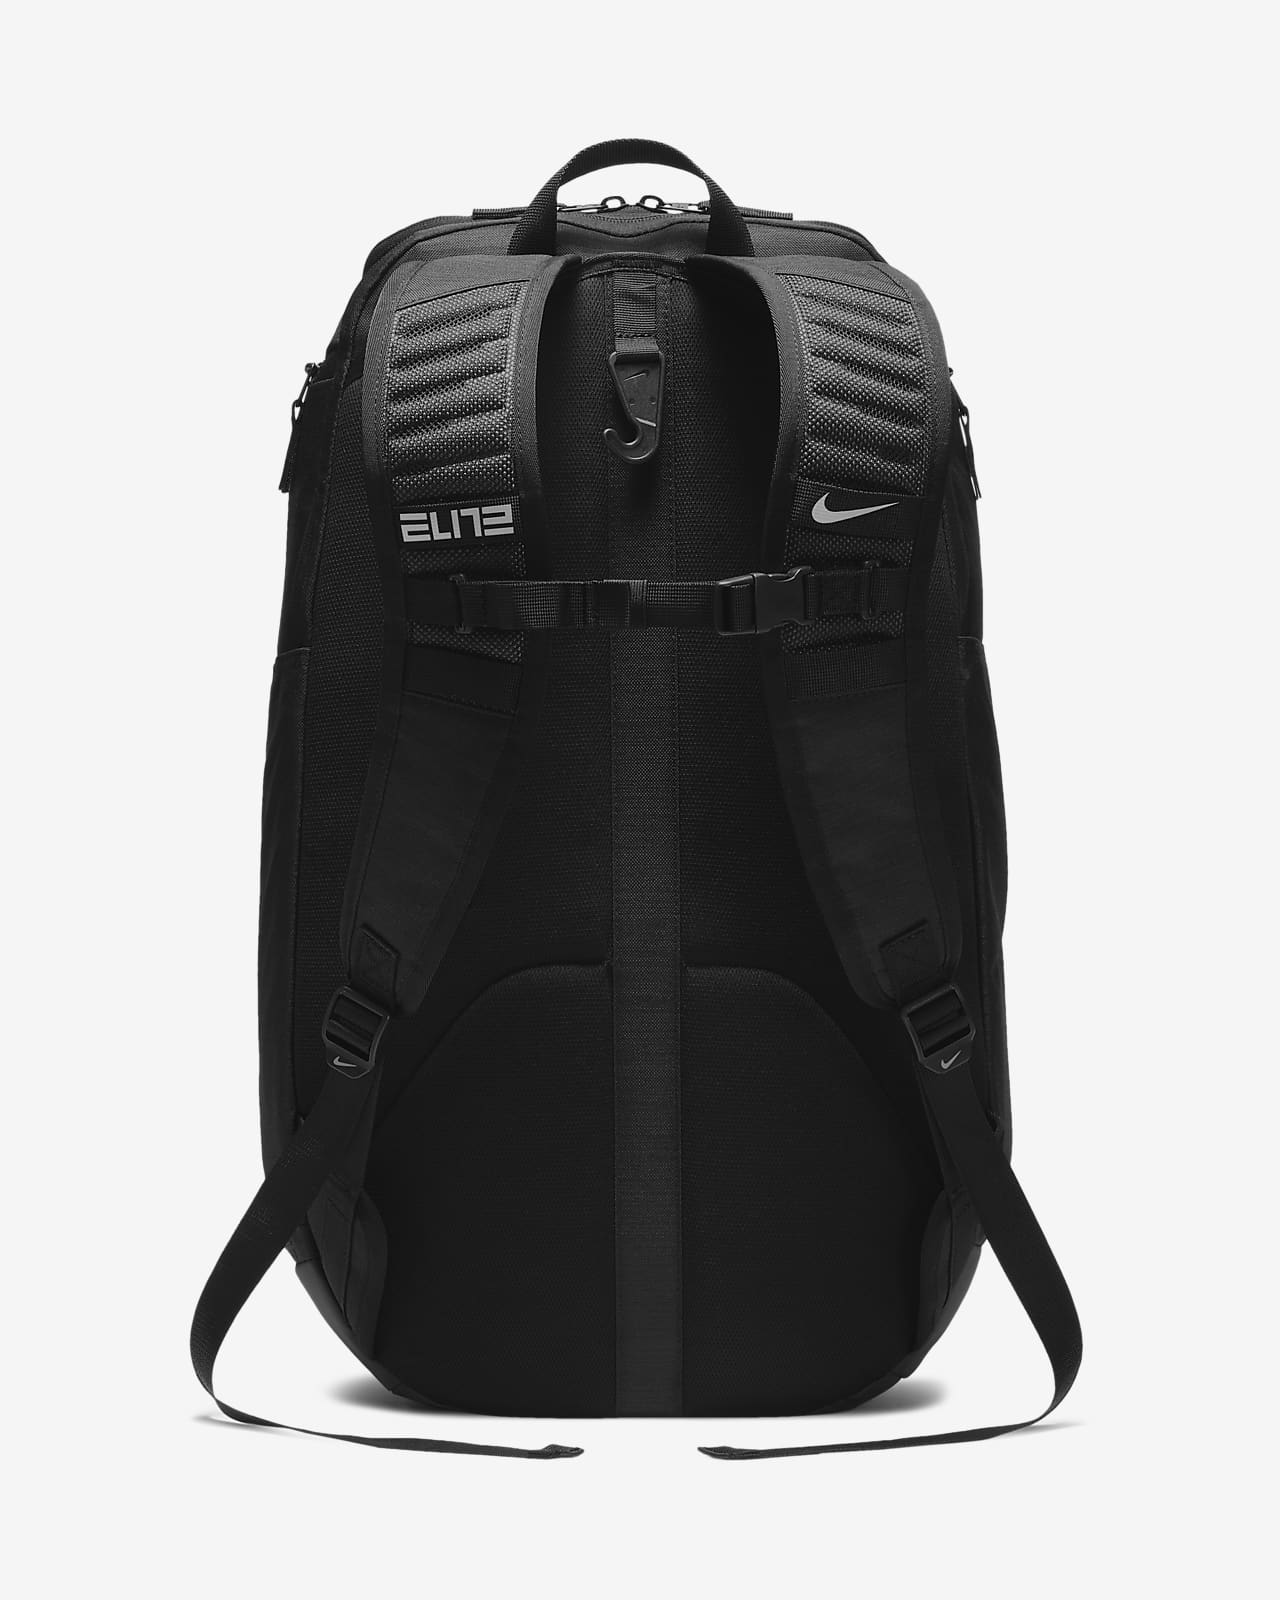 nike elite backpack modells